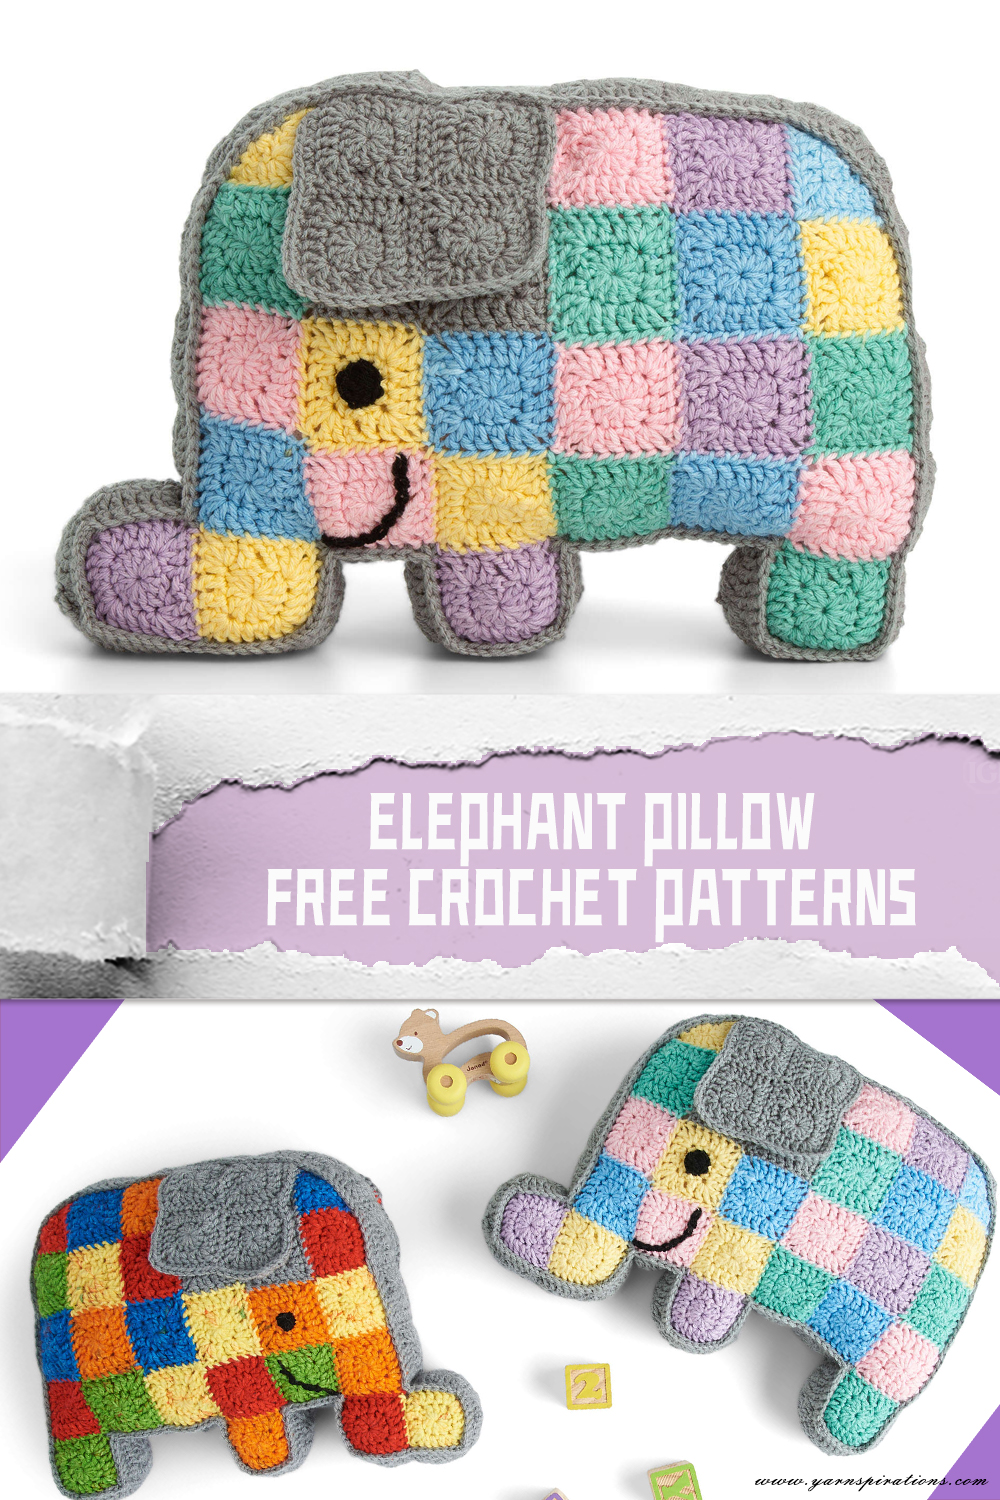 Elephant Pillow FREE Crochet Patterns